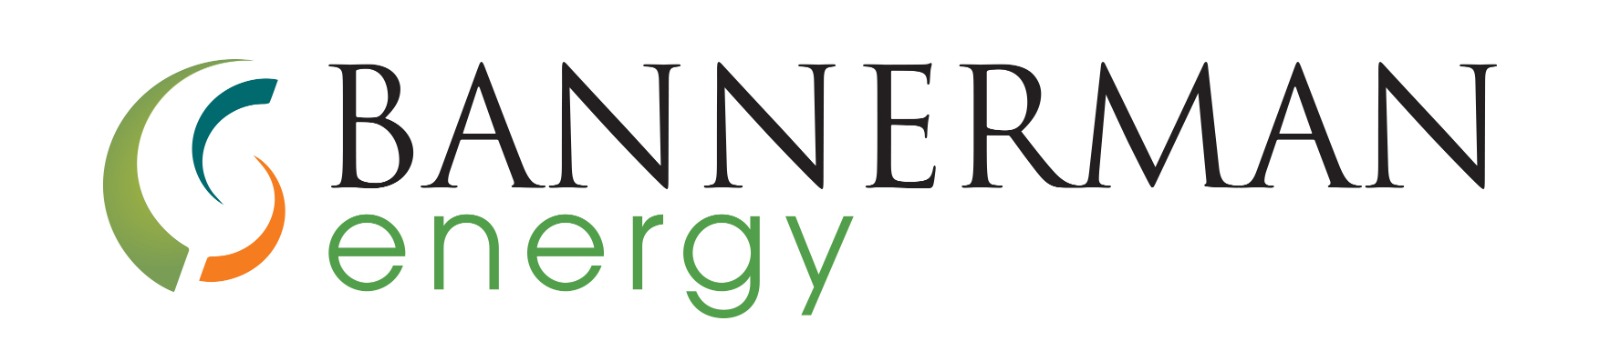 Bannerman Energy Logo